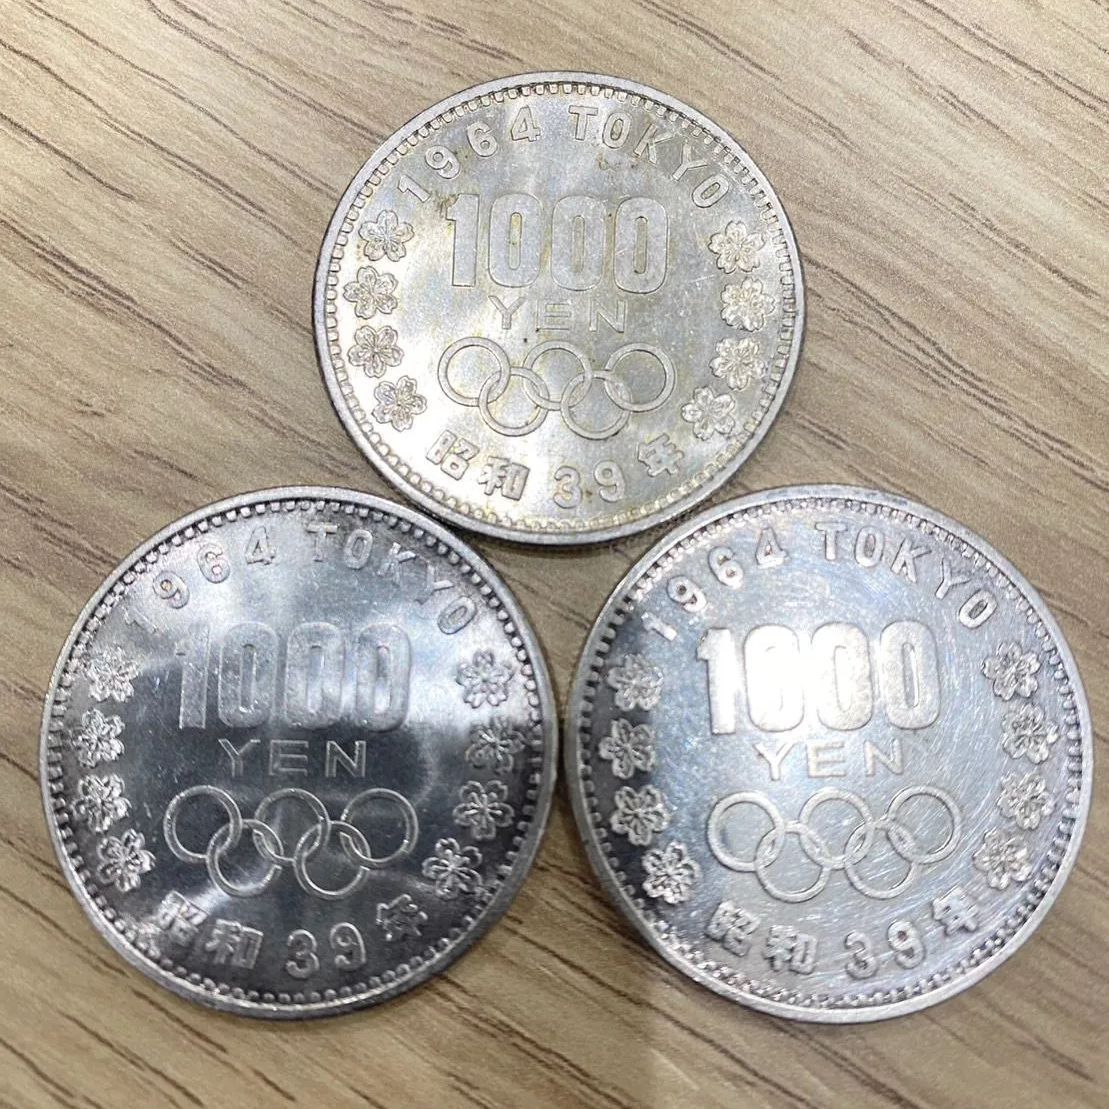 1000円銀貨 1枚 東京オリンピック 1964年 昭和39年 記念硬貨 千円銀貨 ...